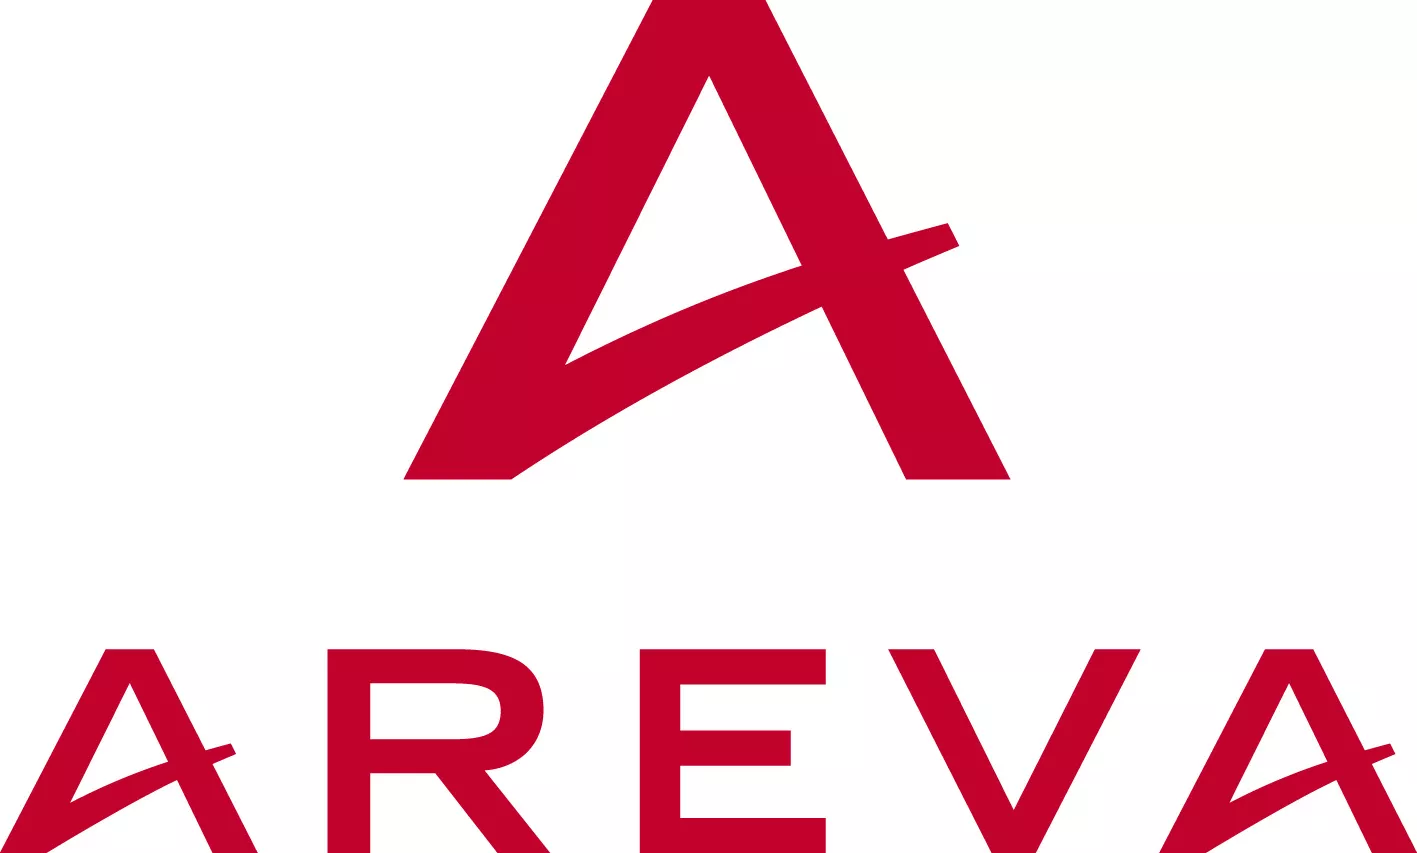 AREVA_logo